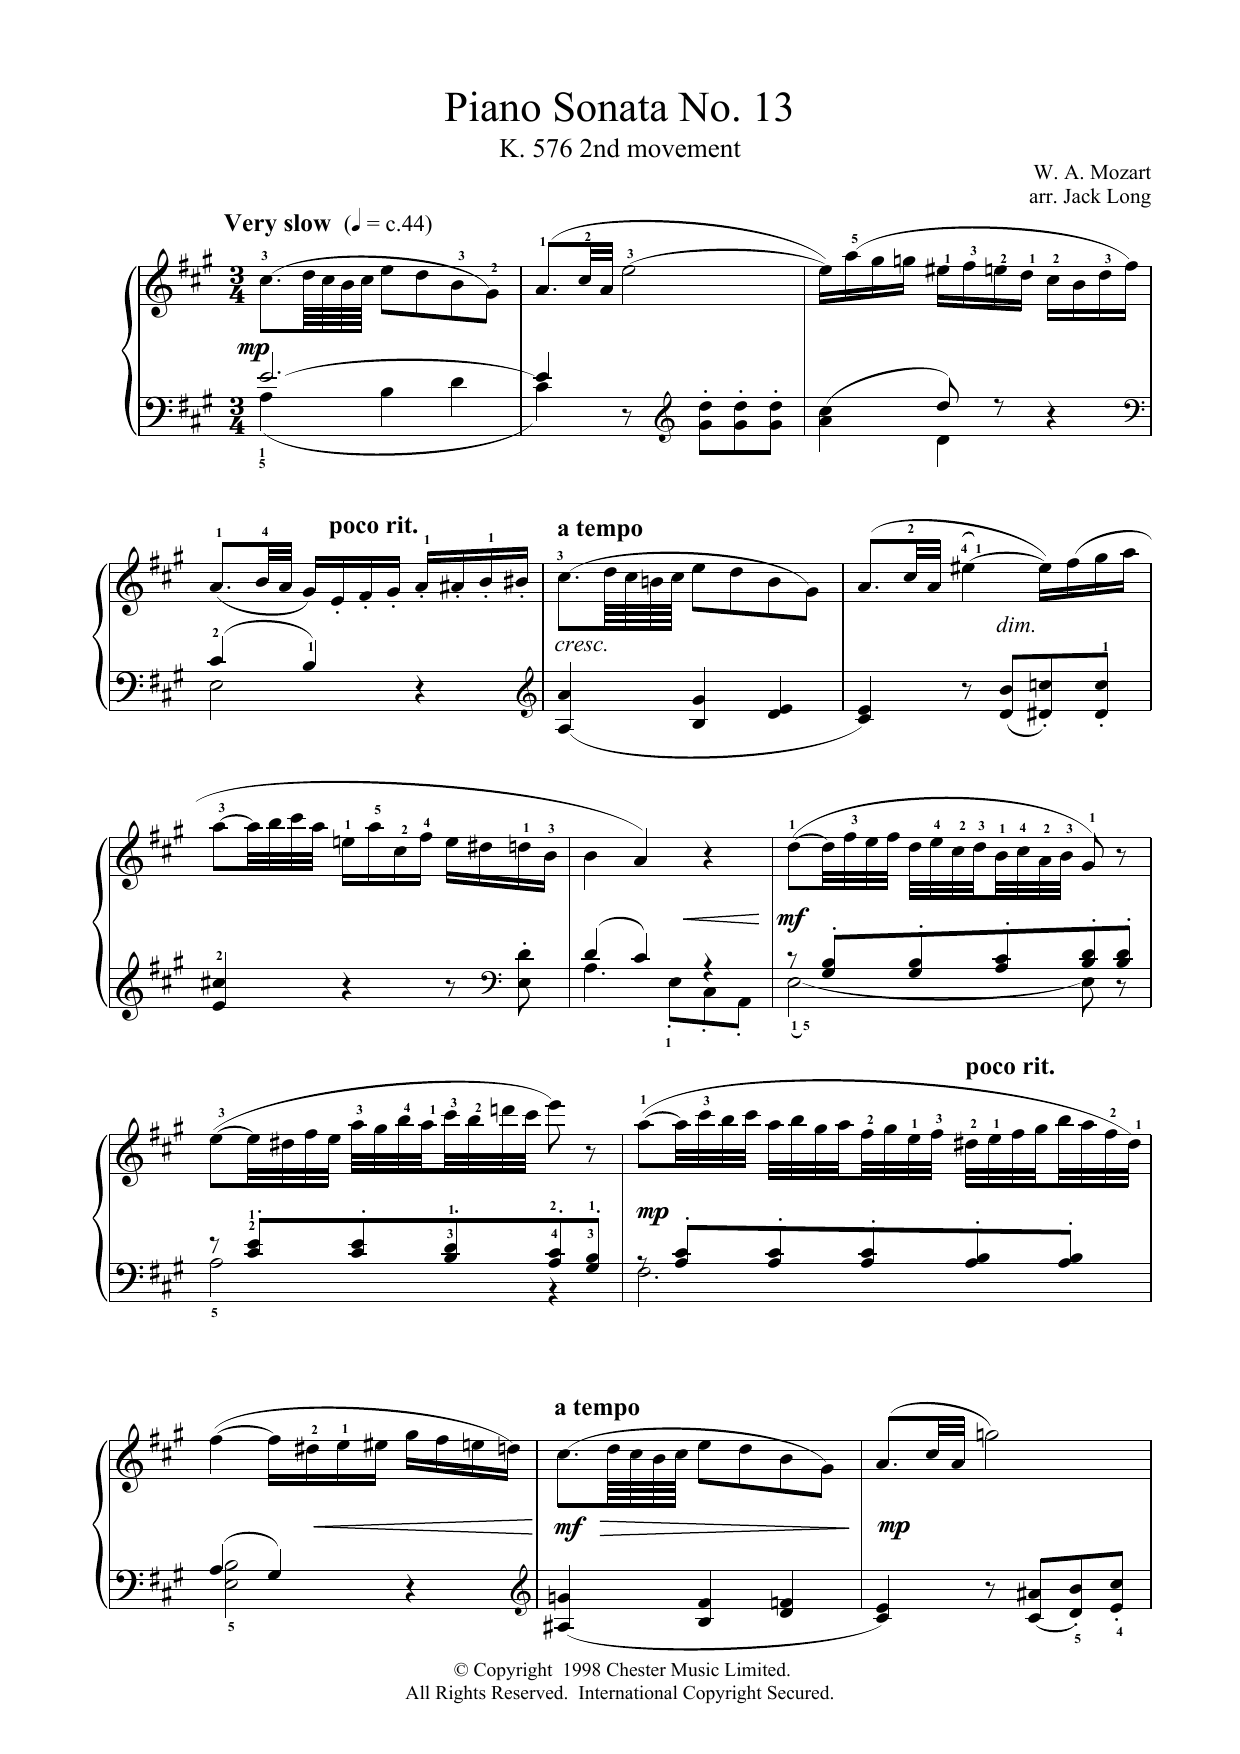 Wolfgang Amadeus Mozart Piano Sonata No.13 sheet music notes printable PDF score